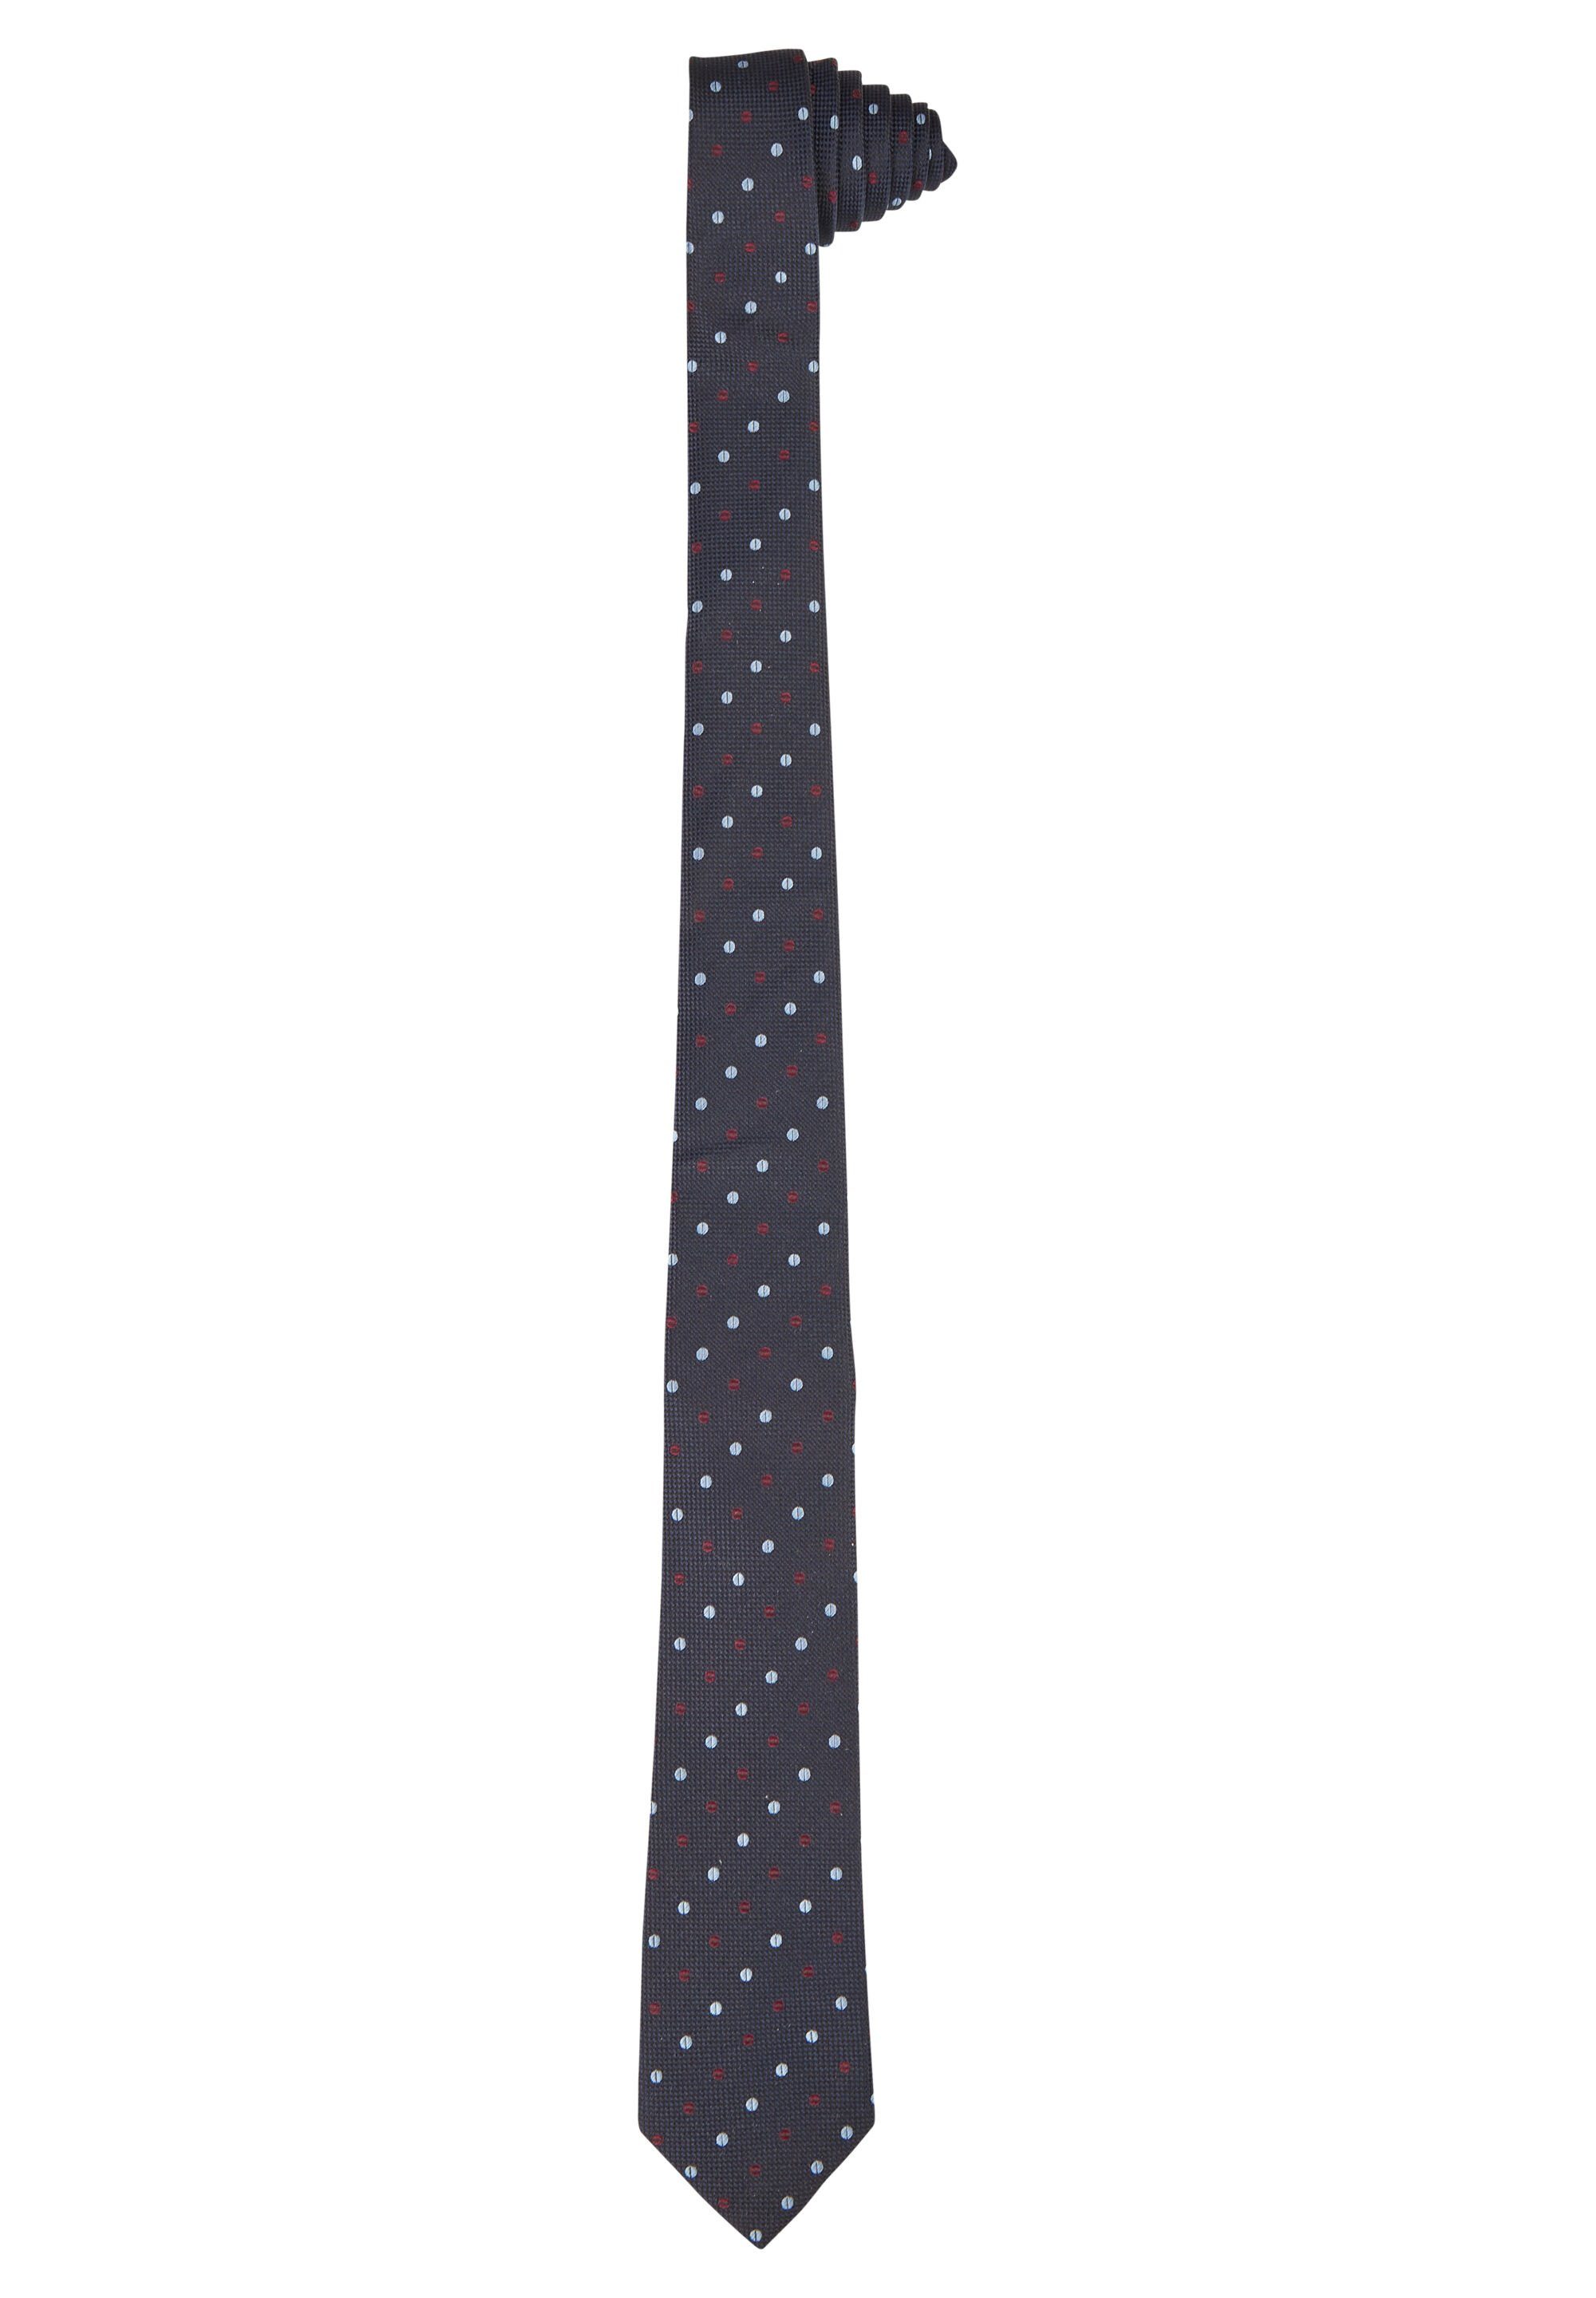 HECHTER Krawatte modernem Muster PARIS navy mit